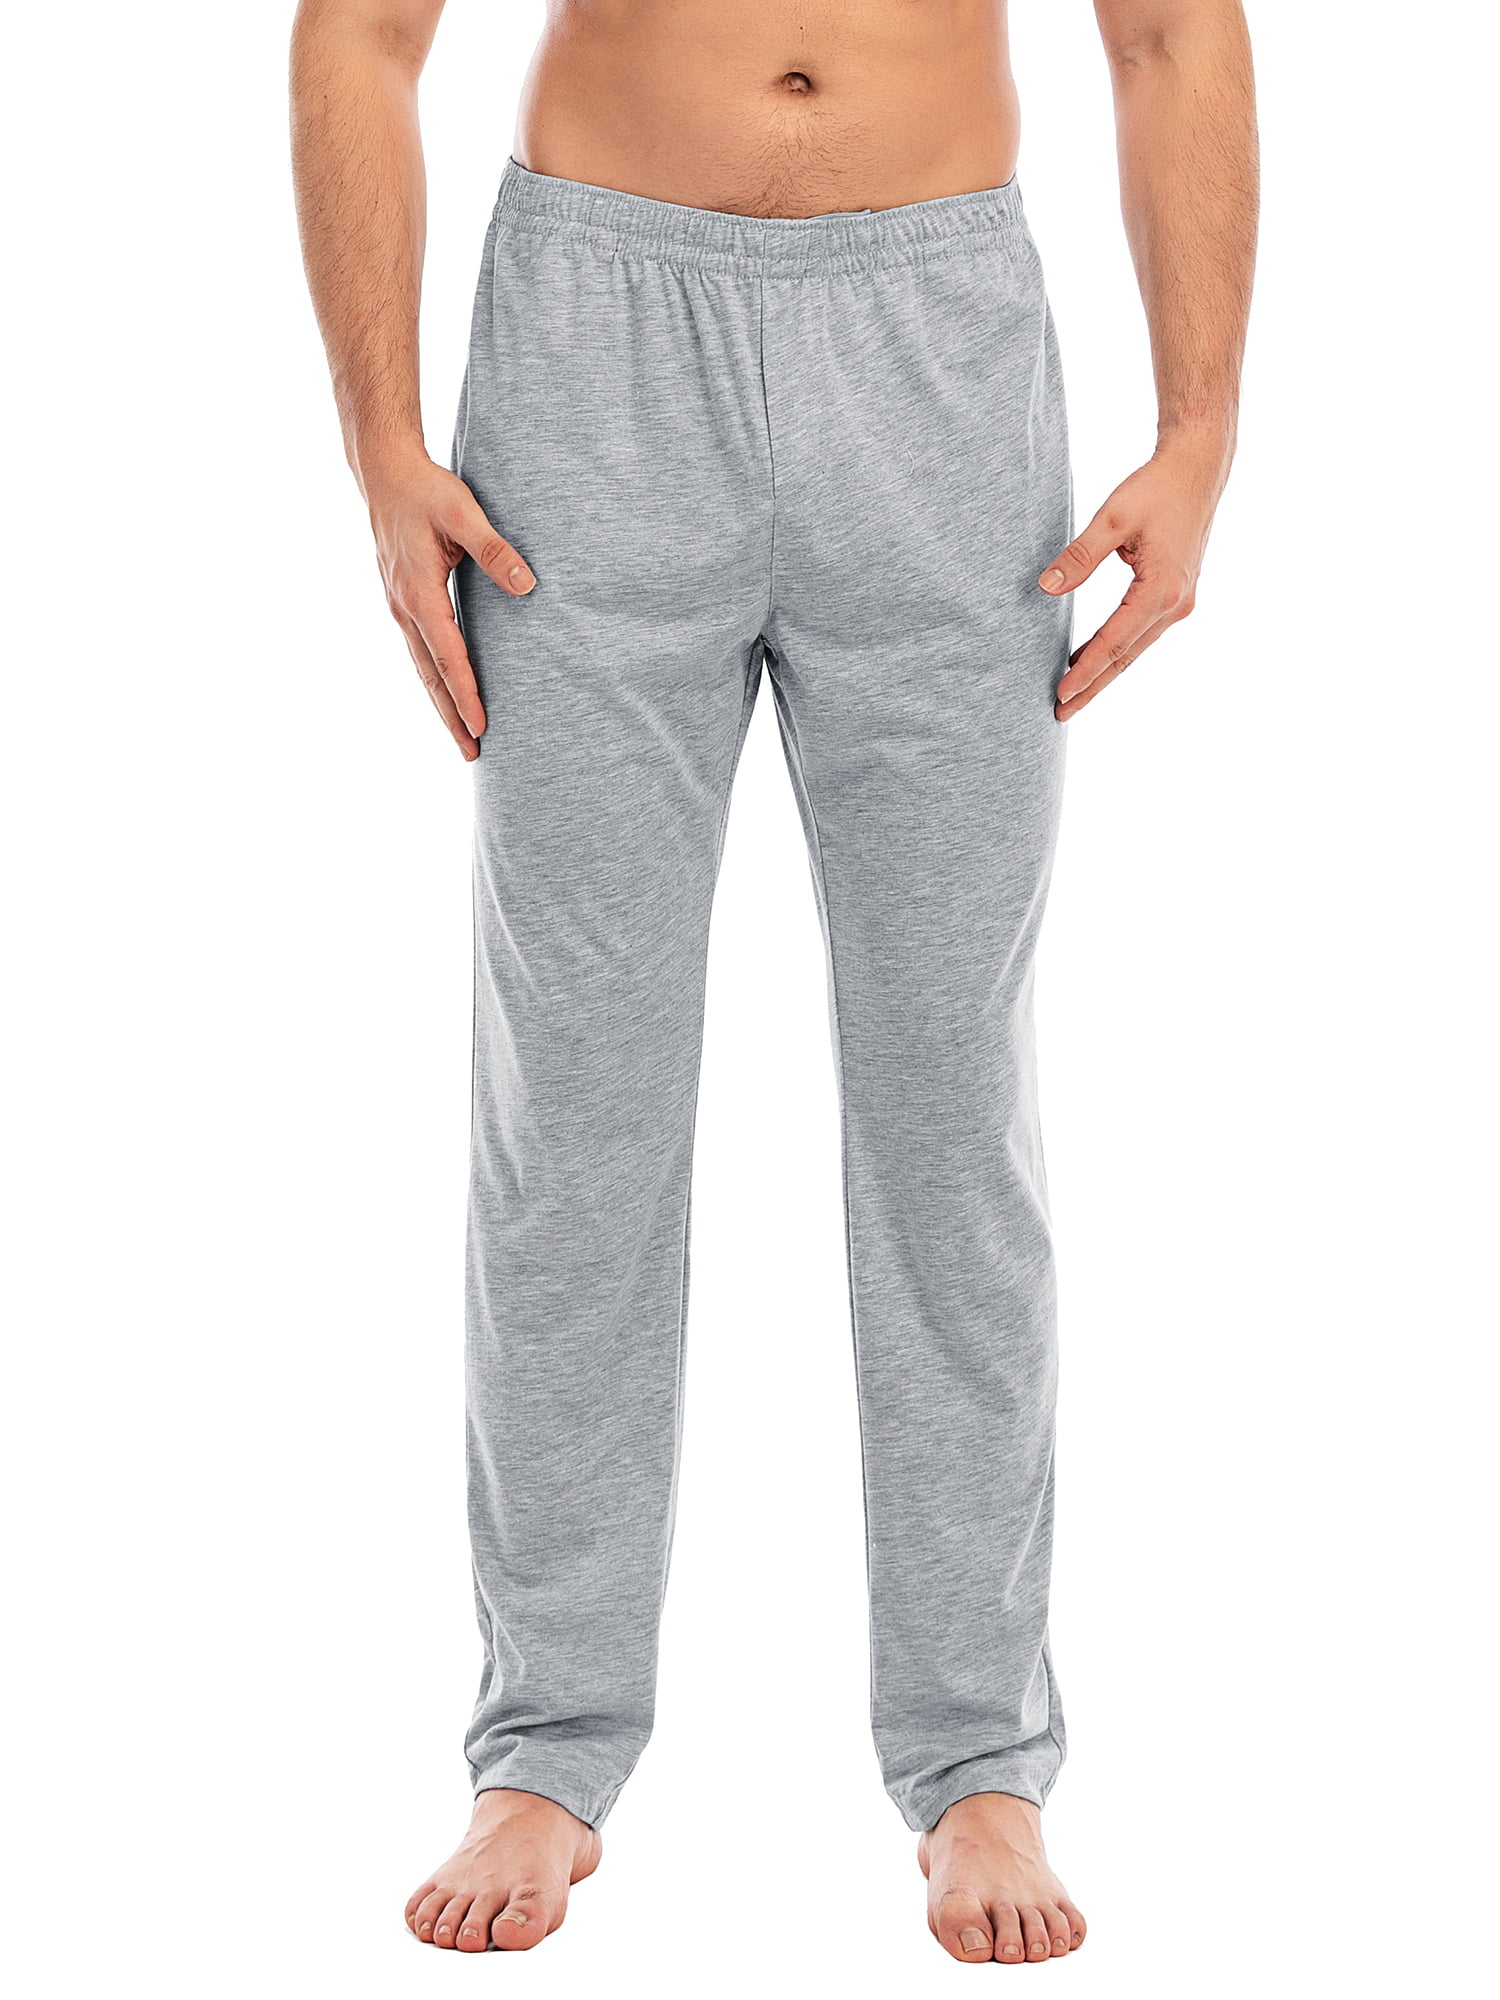 Bar lll Men Gray Sweat Pants Lower New S M XL Sleepwear Drawstring Lounge Casual 